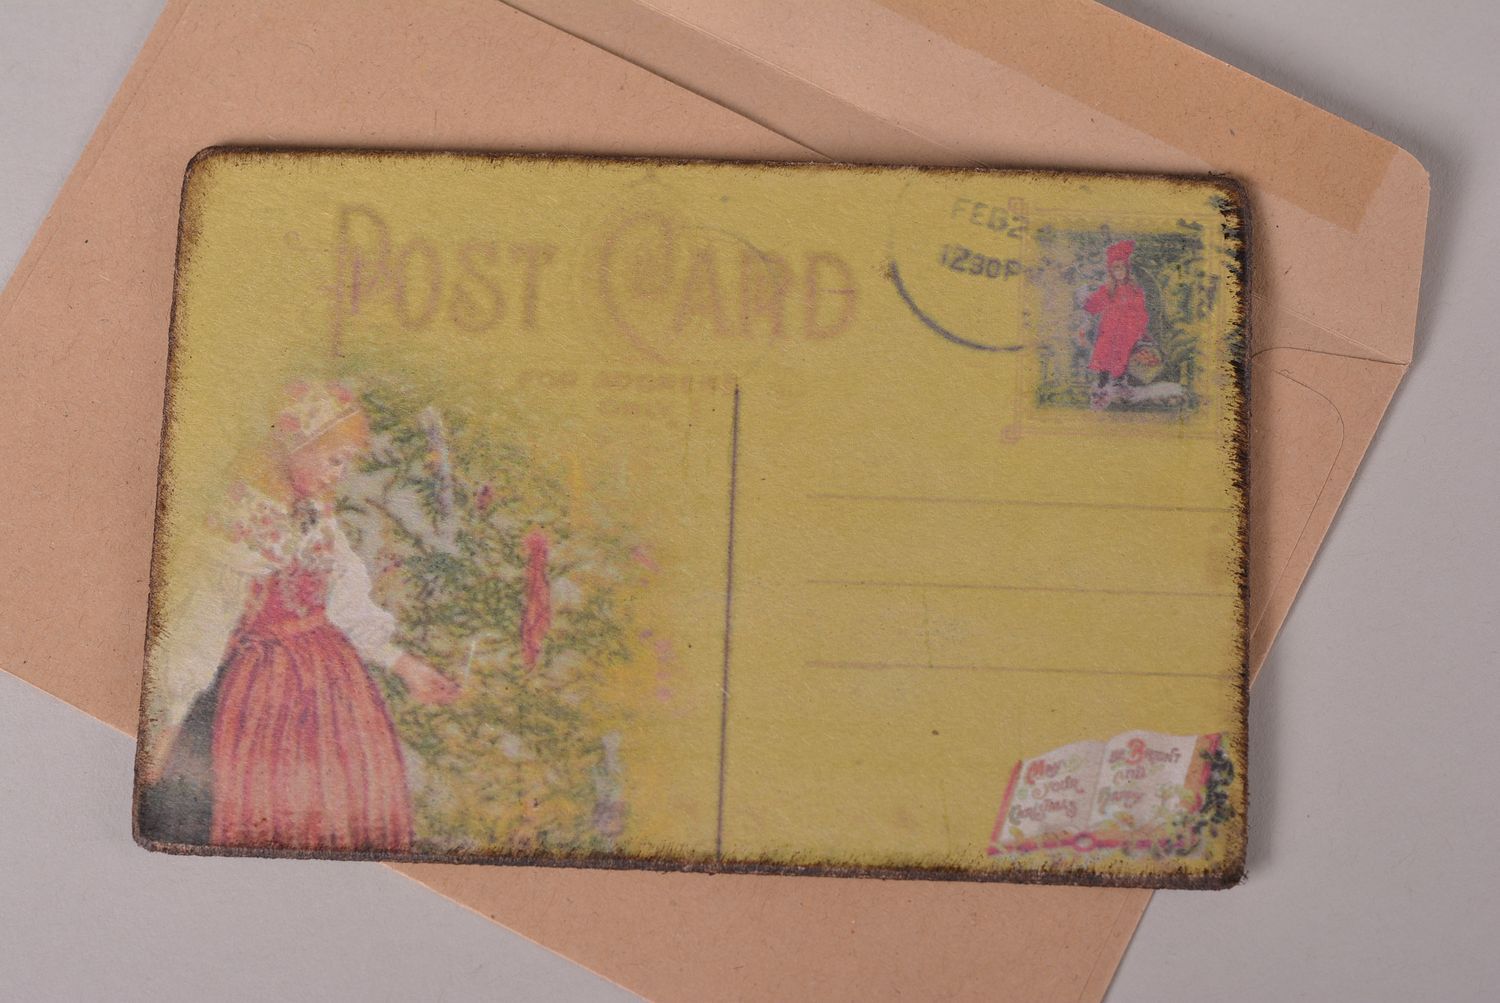 Unusual handmade greeting card vintage card decoupage ideas small gifts photo 2